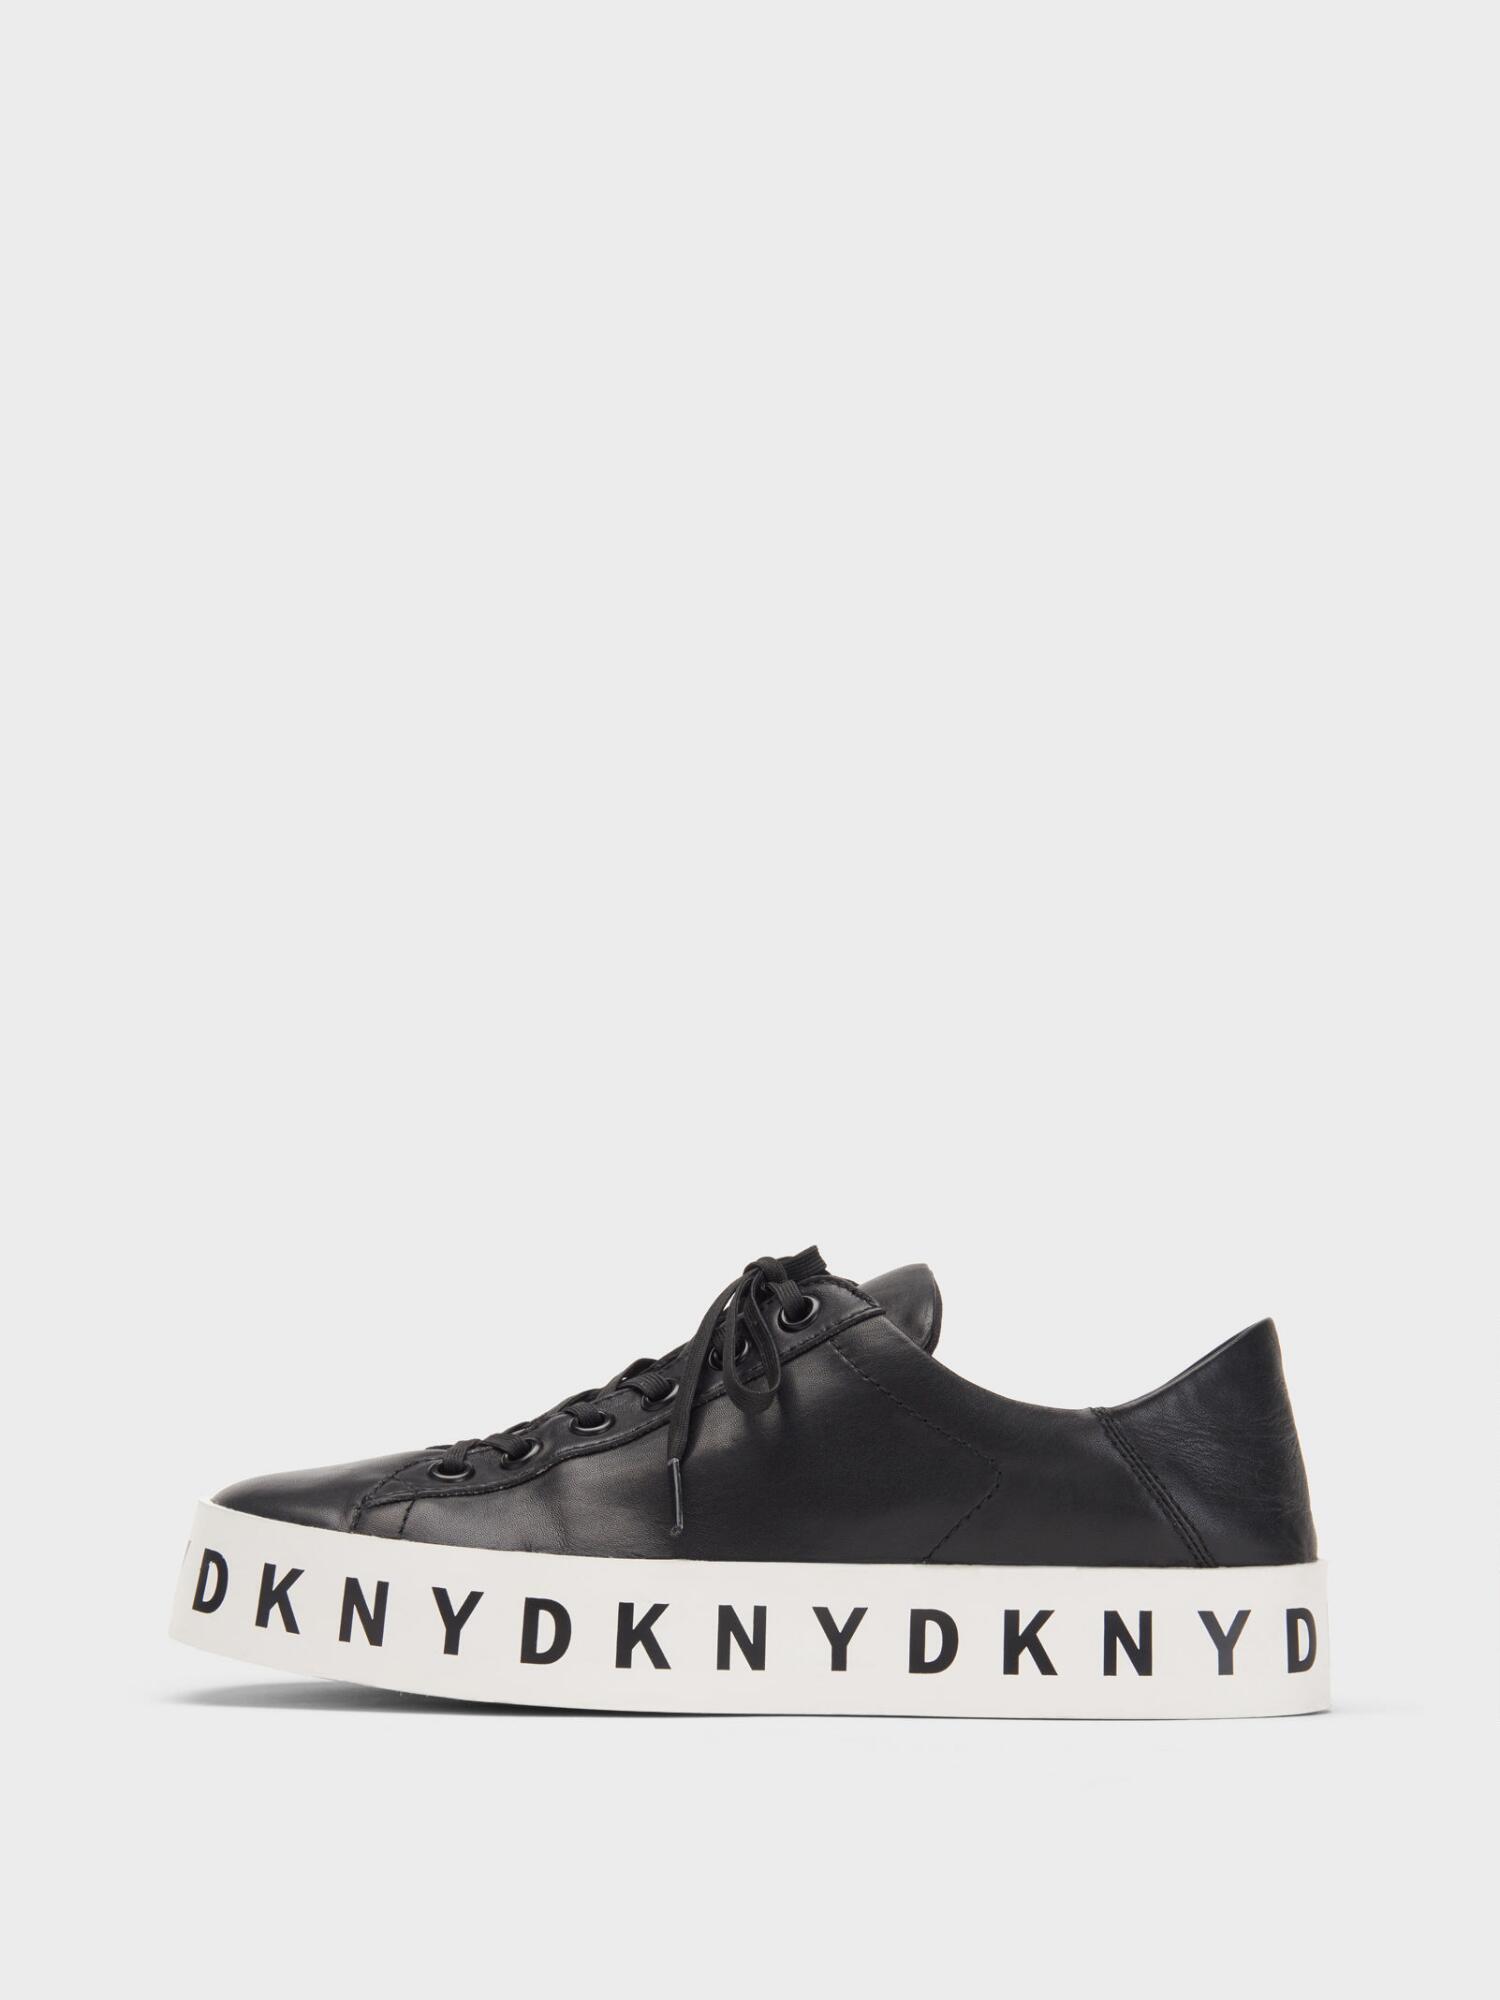 myer dkny shoes